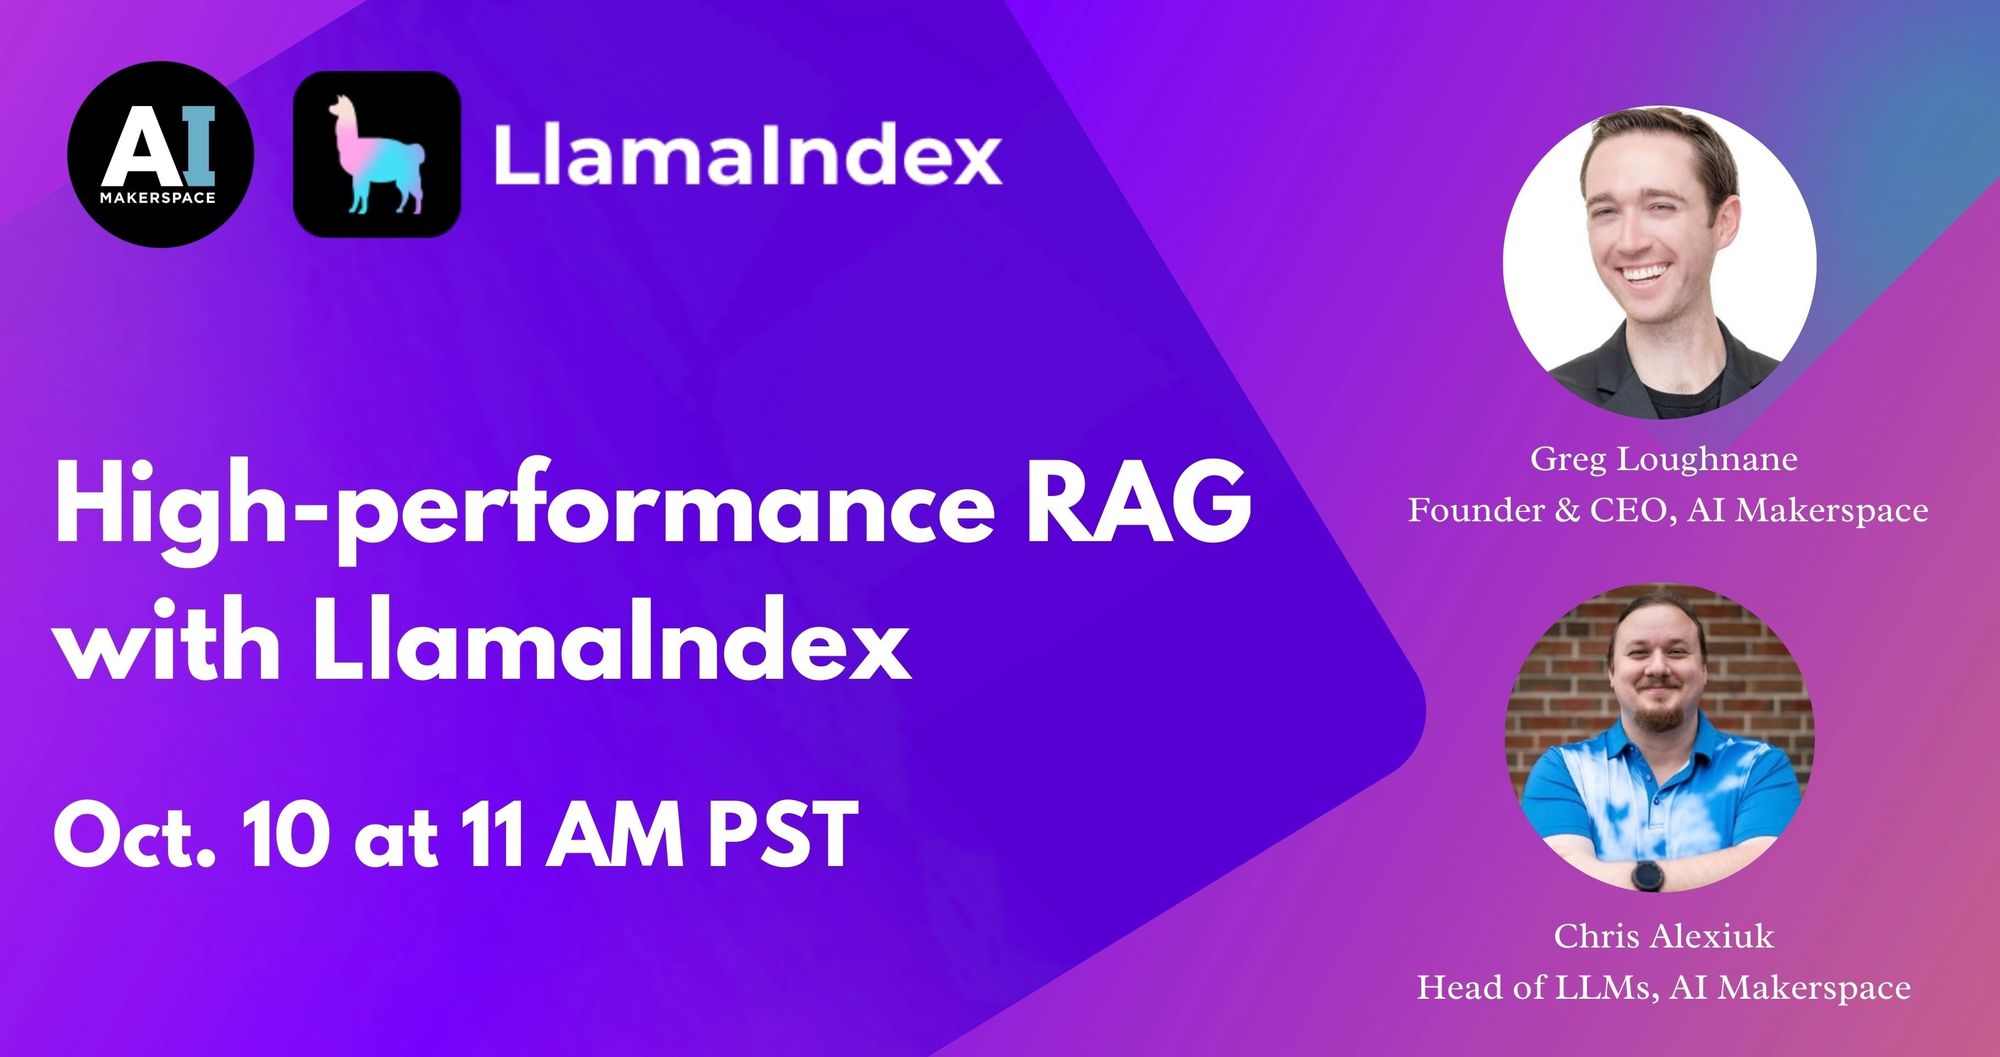 Webinar "High-performance RAG with LlamaIndex"